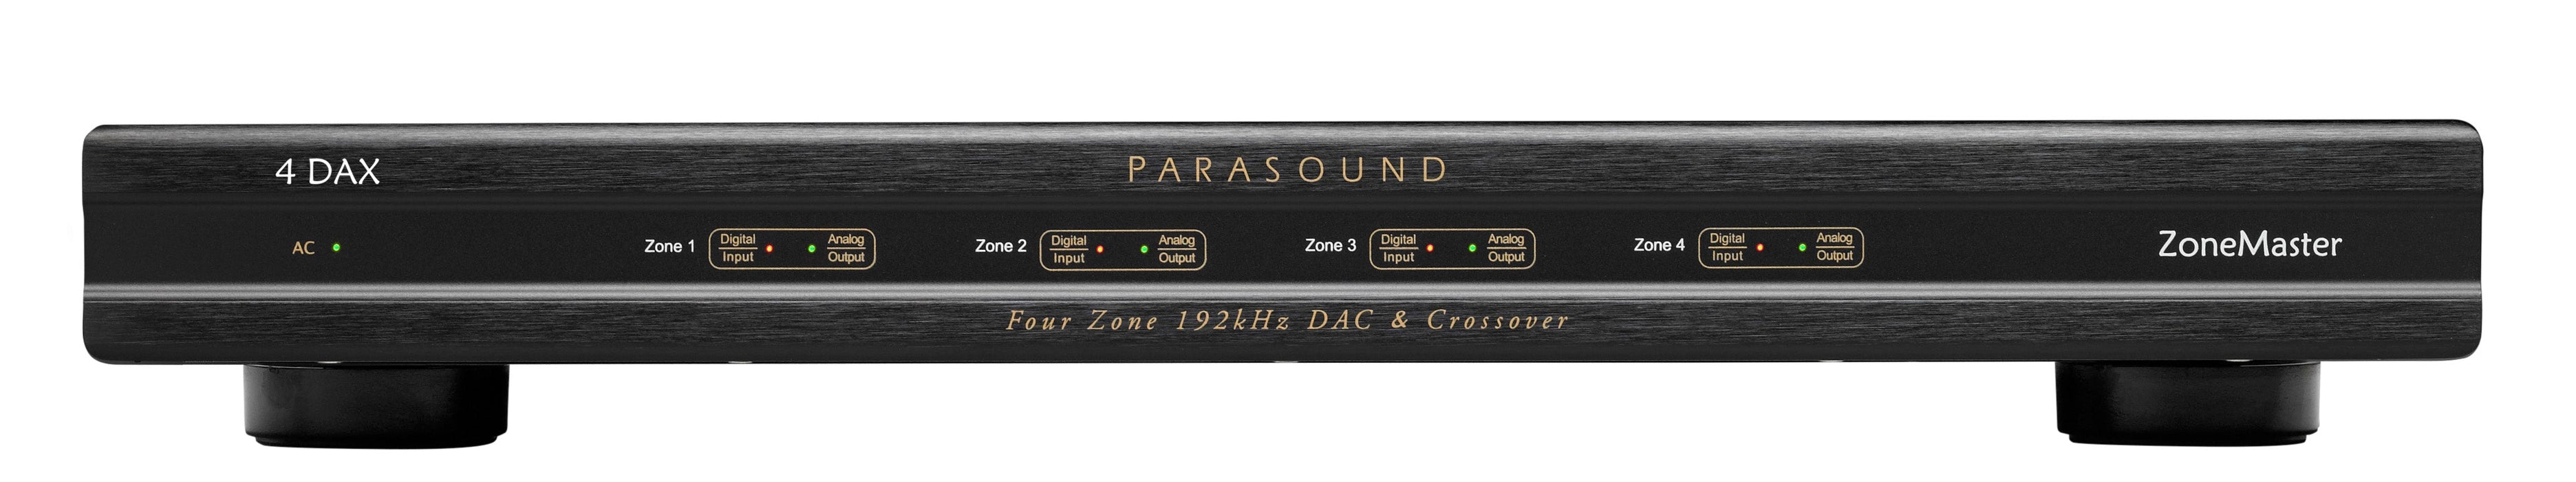 Parasound ZoneMaster 4 DAX  Four Zone 192kHz 24bit DAC and Crossover B-Stock No Warranty - Safe and Sound HQ